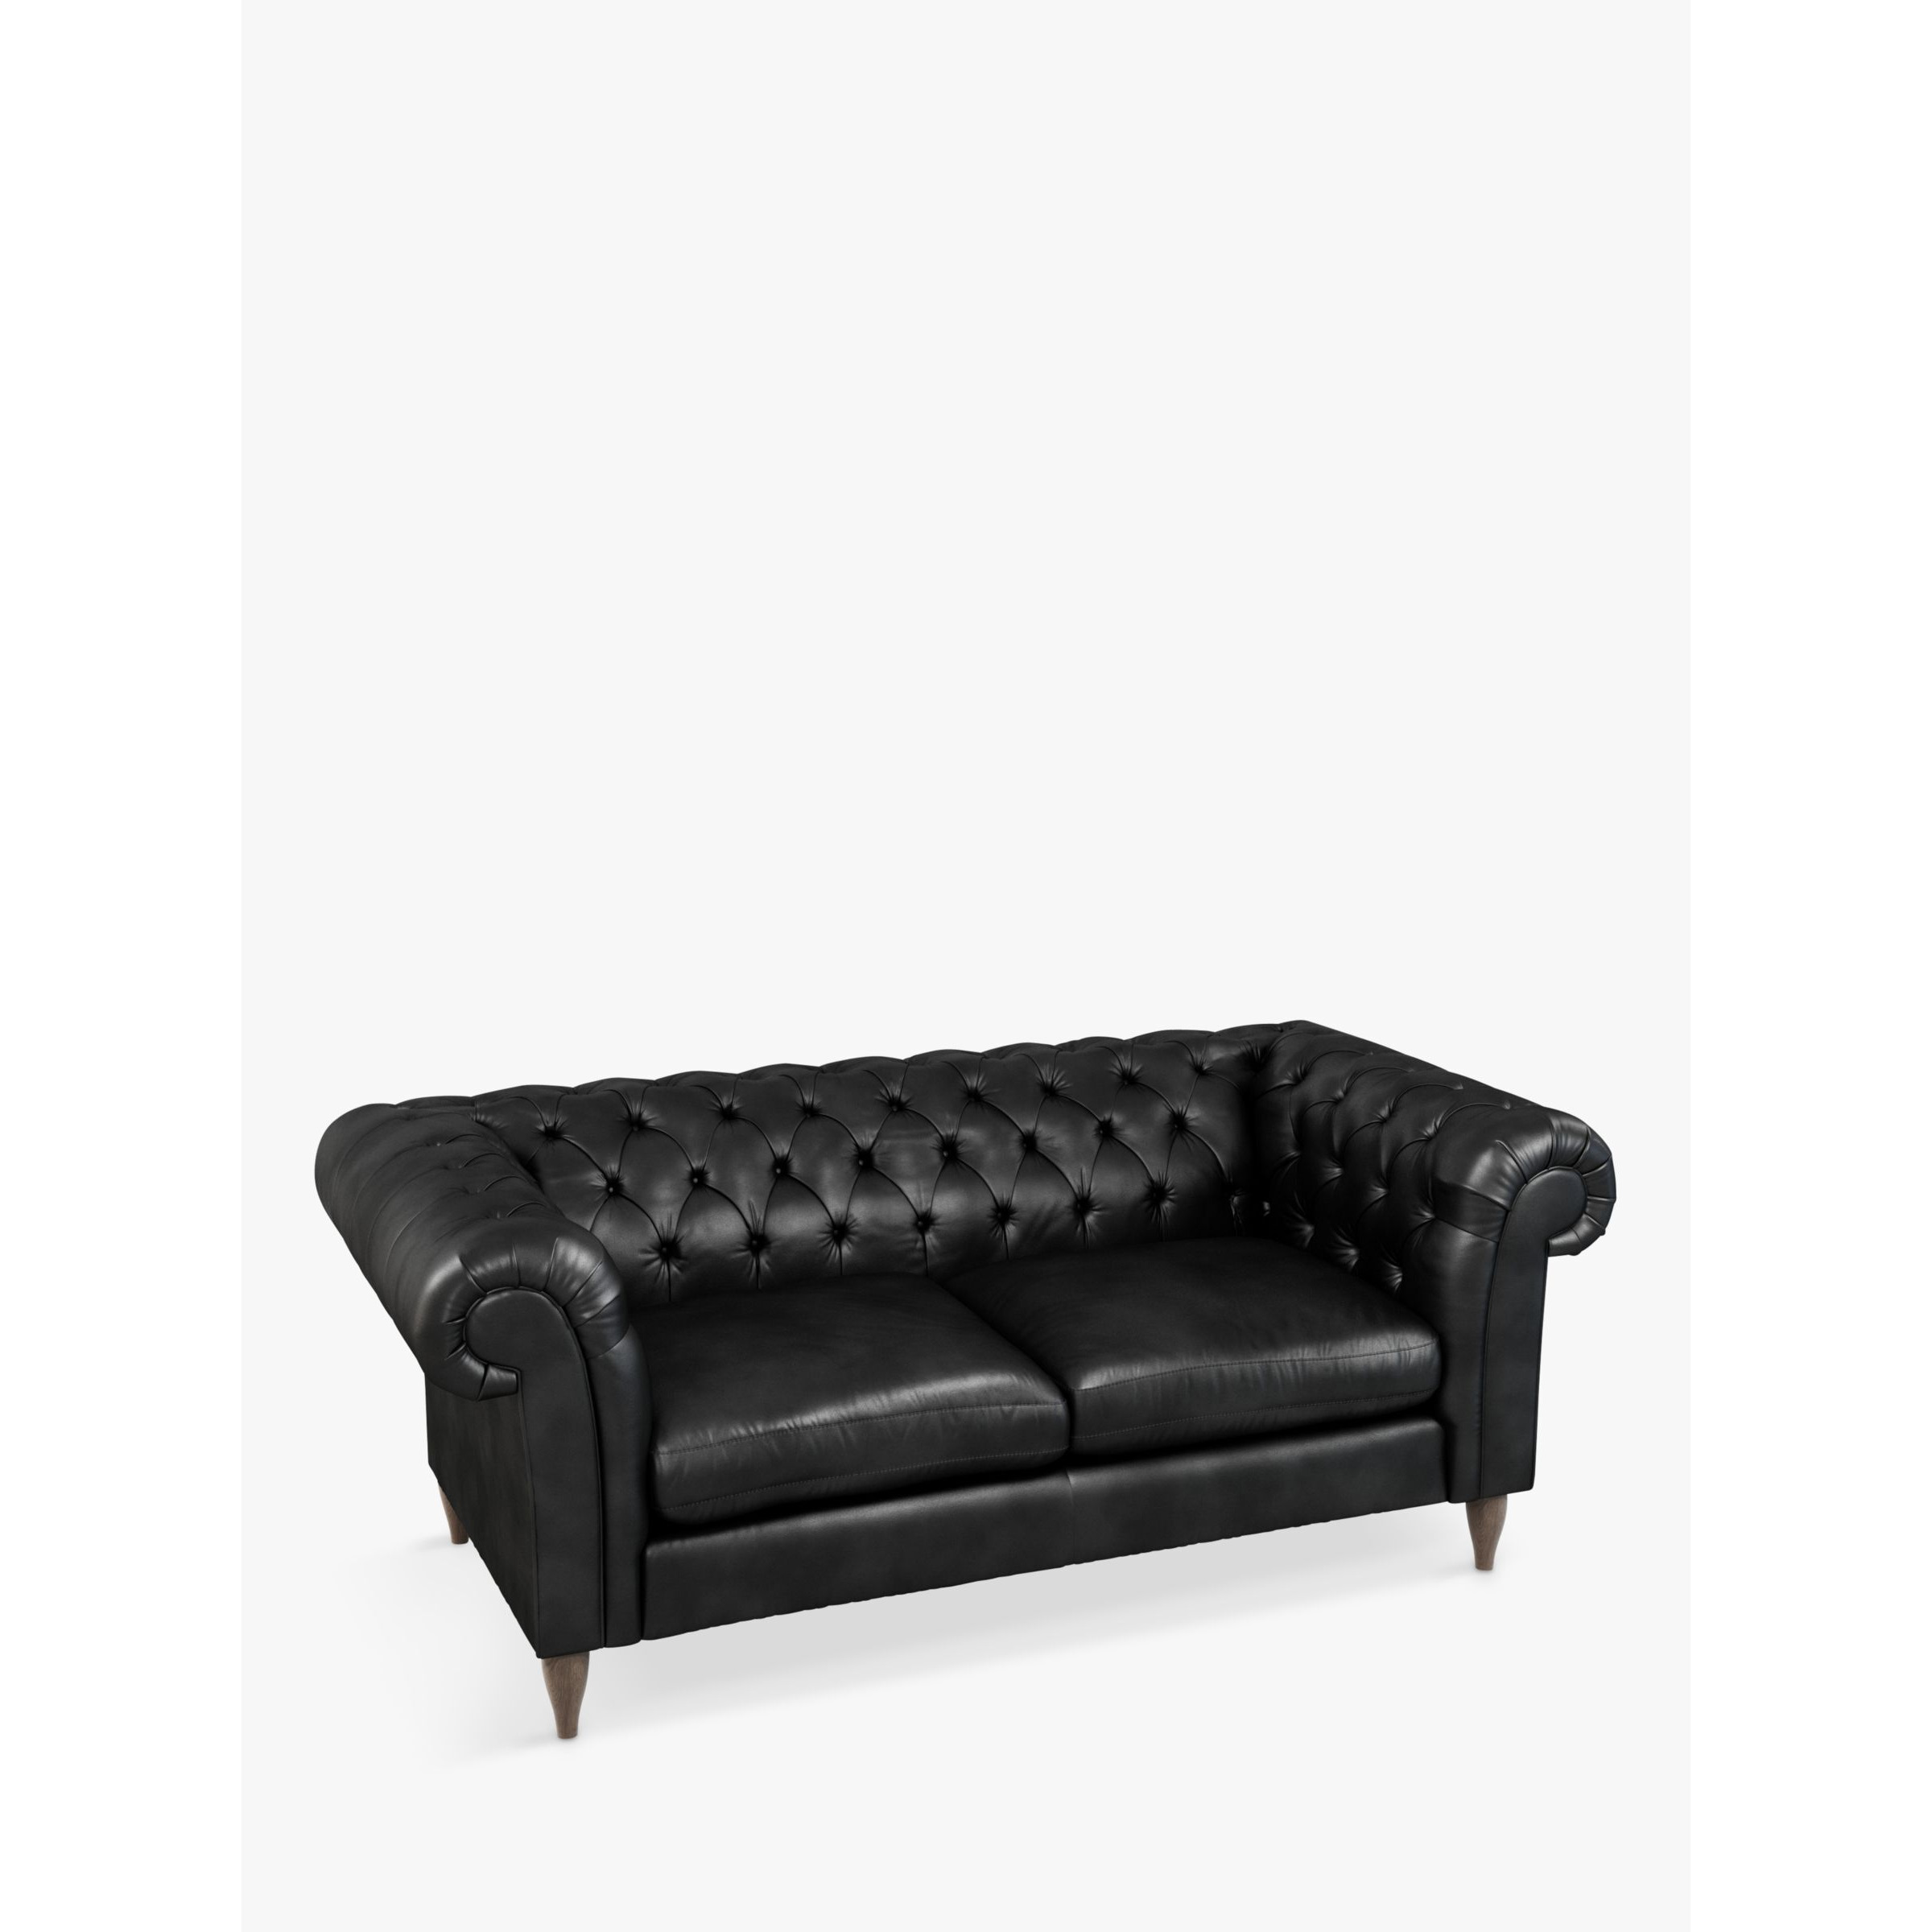 John Lewis Cromwell Chesterfield Large 3 Seater Leather Sofa, Dark Leg - image 1